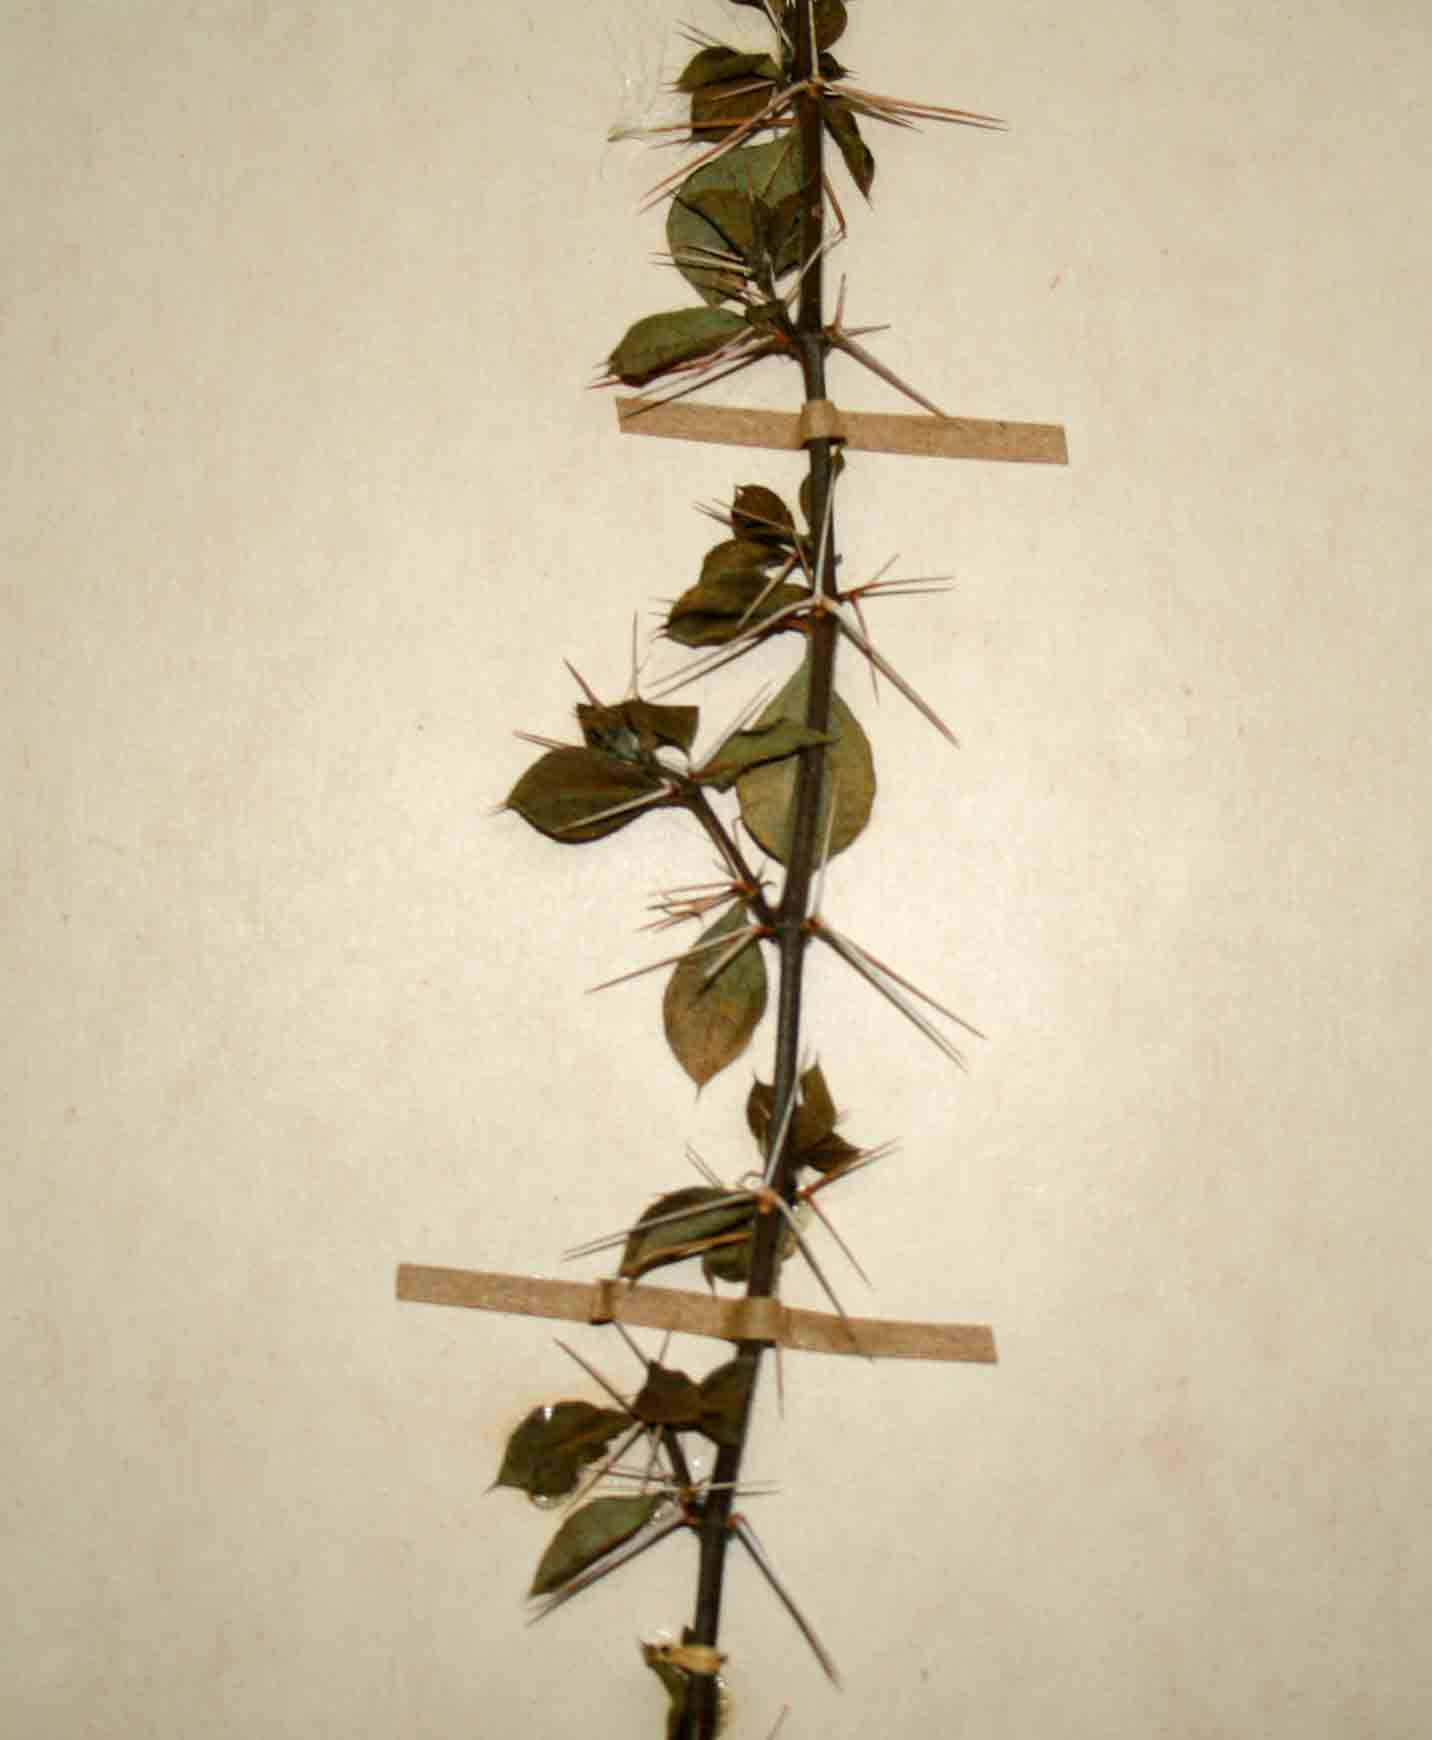 Barleria holubii subsp. holubii